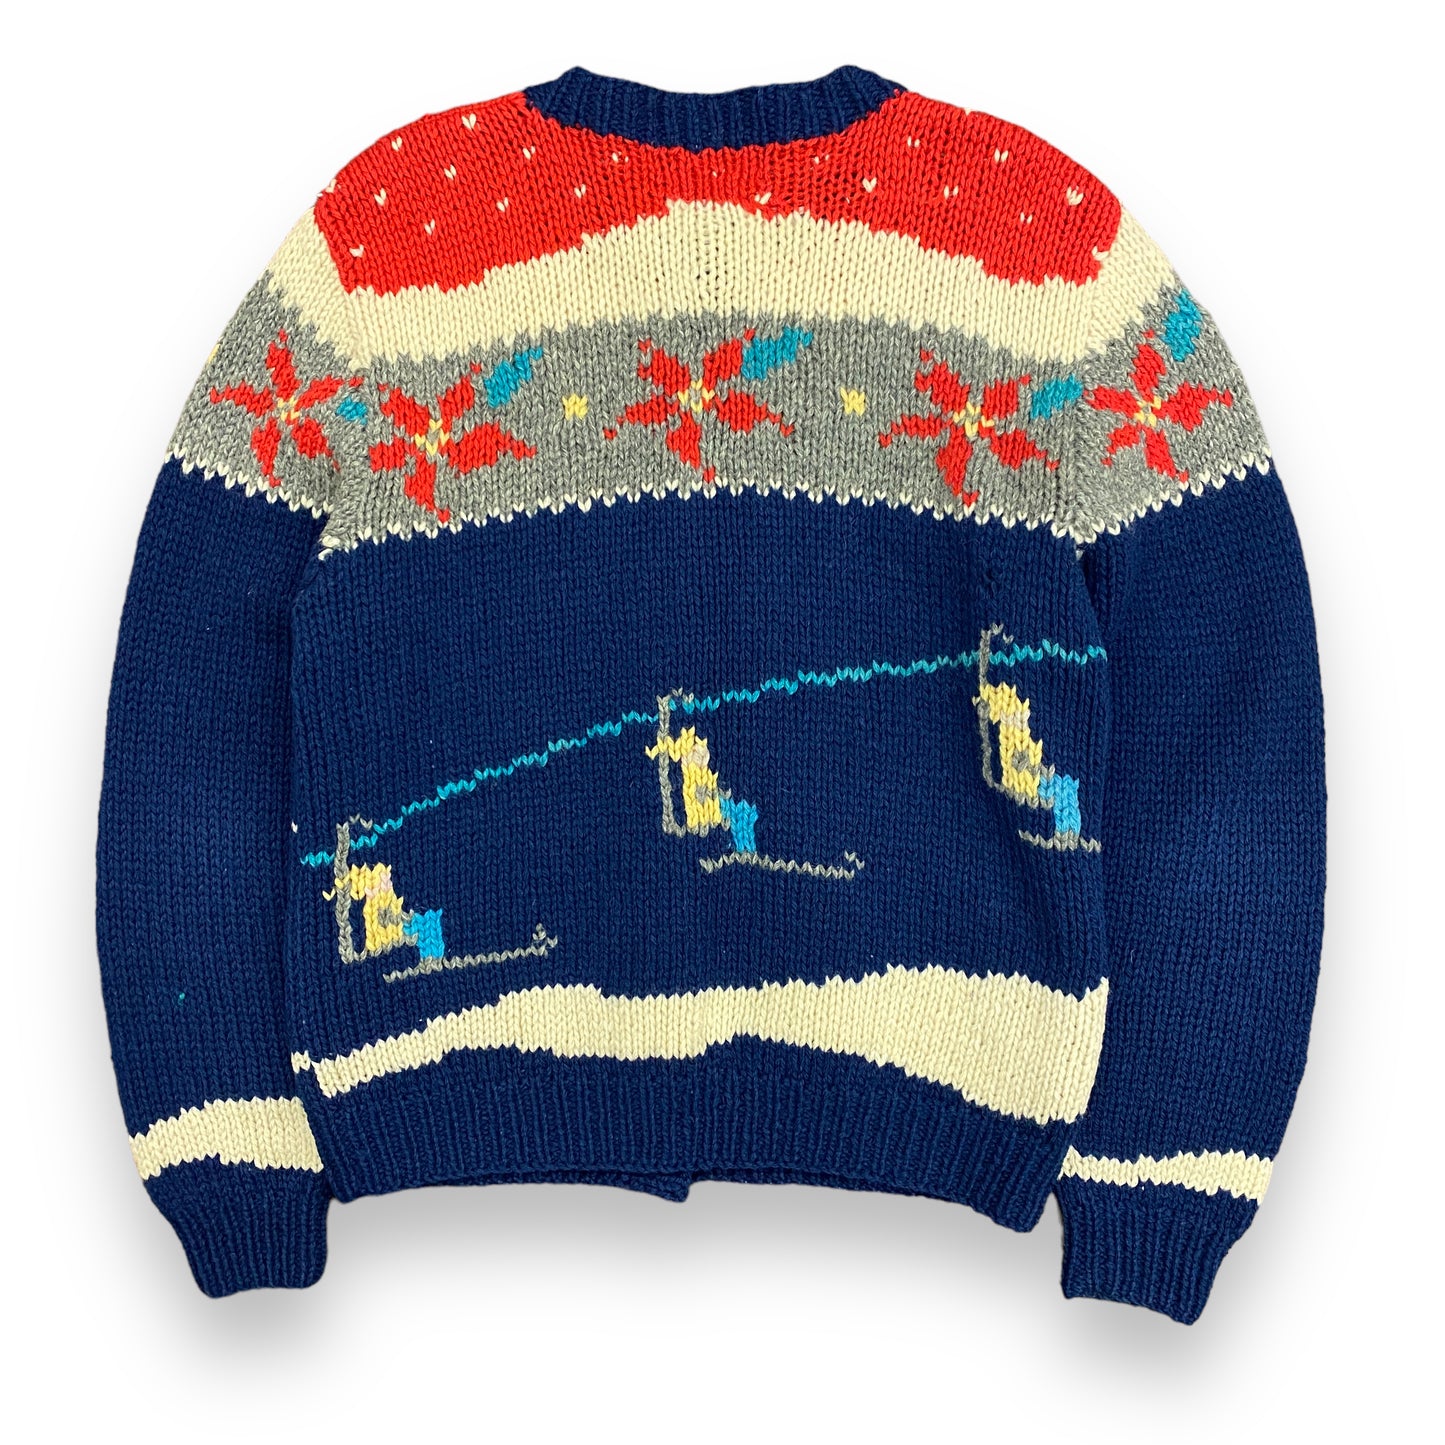 Vintage Woolrich "Snow Day" Knit Wool Cardigan - Size Medium